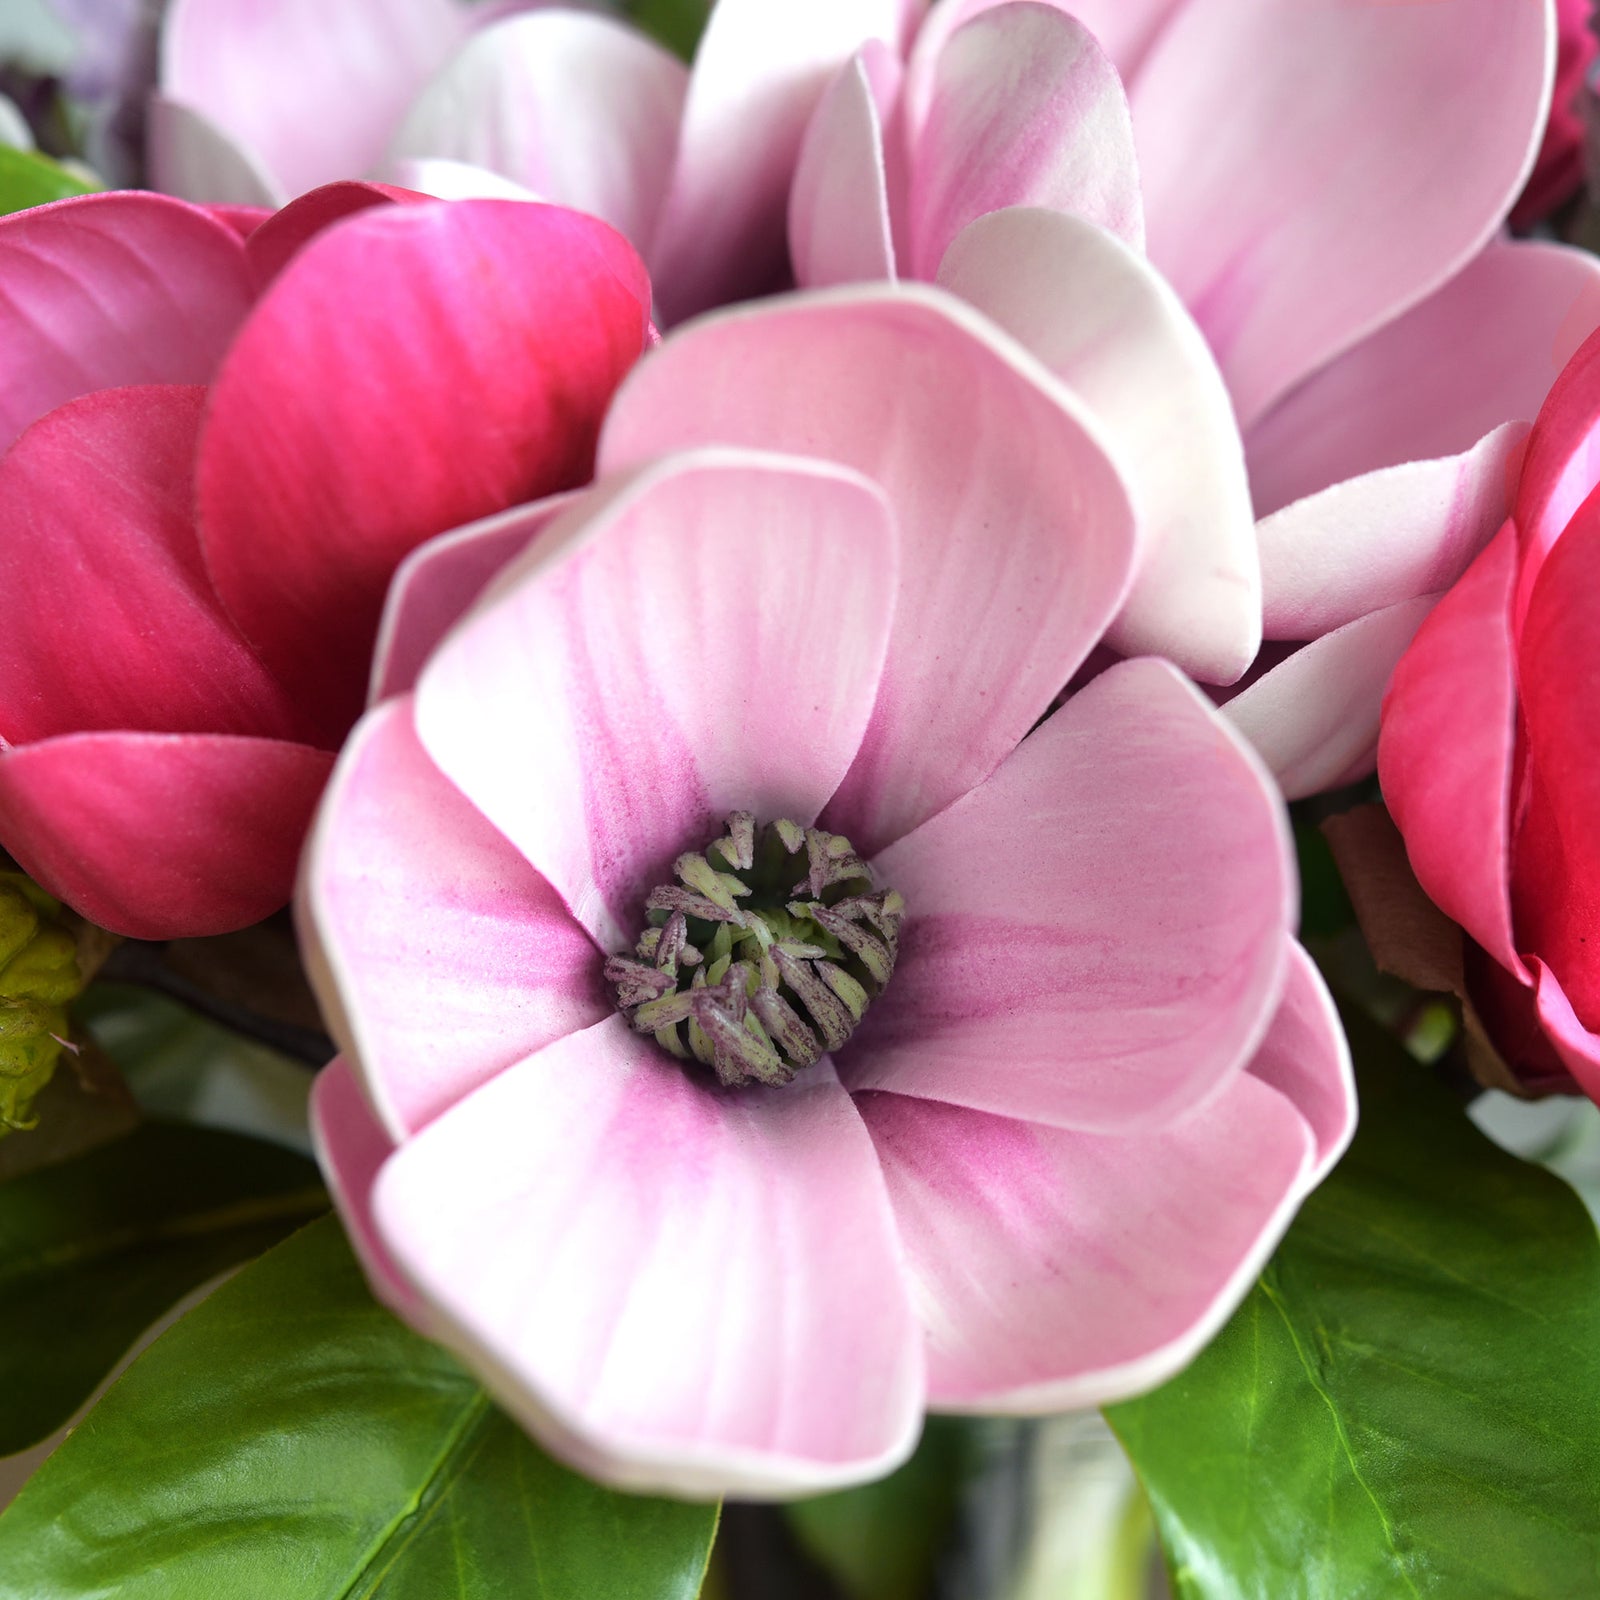 FiveSeasonStuff Dusty Pink Magnolia Artificial Flowers Arrangement with 4 Stems, Wedding Bridesmaids Bouquet Home Decor